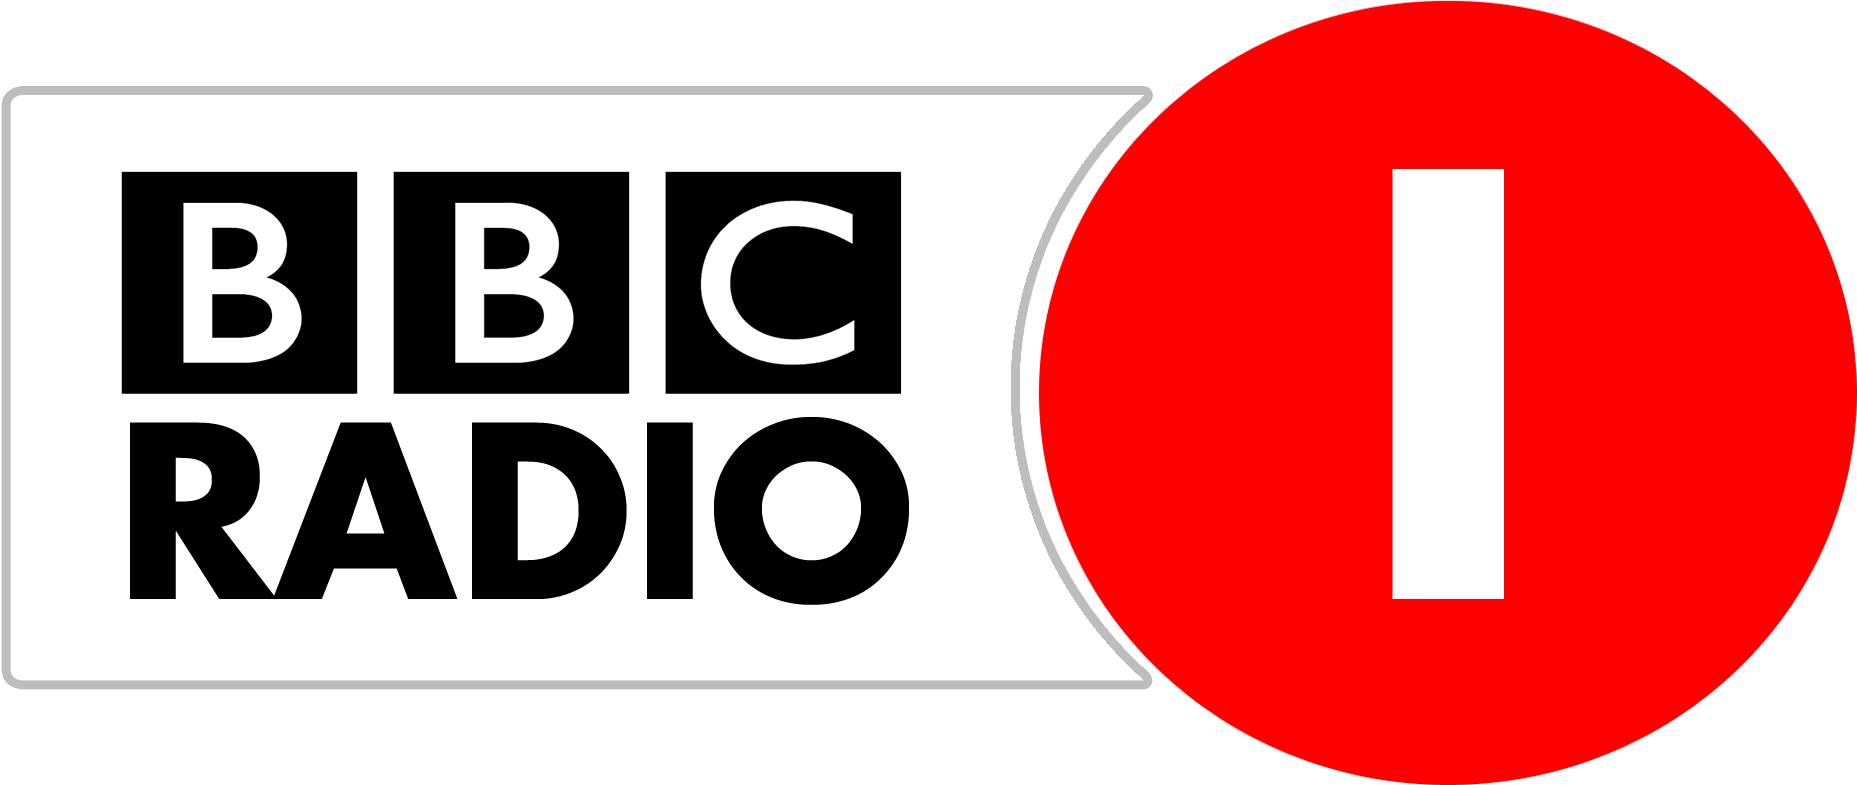 Bbc Radio 1 Logo - New Bbc Radio Logos (1938x892), Png Download